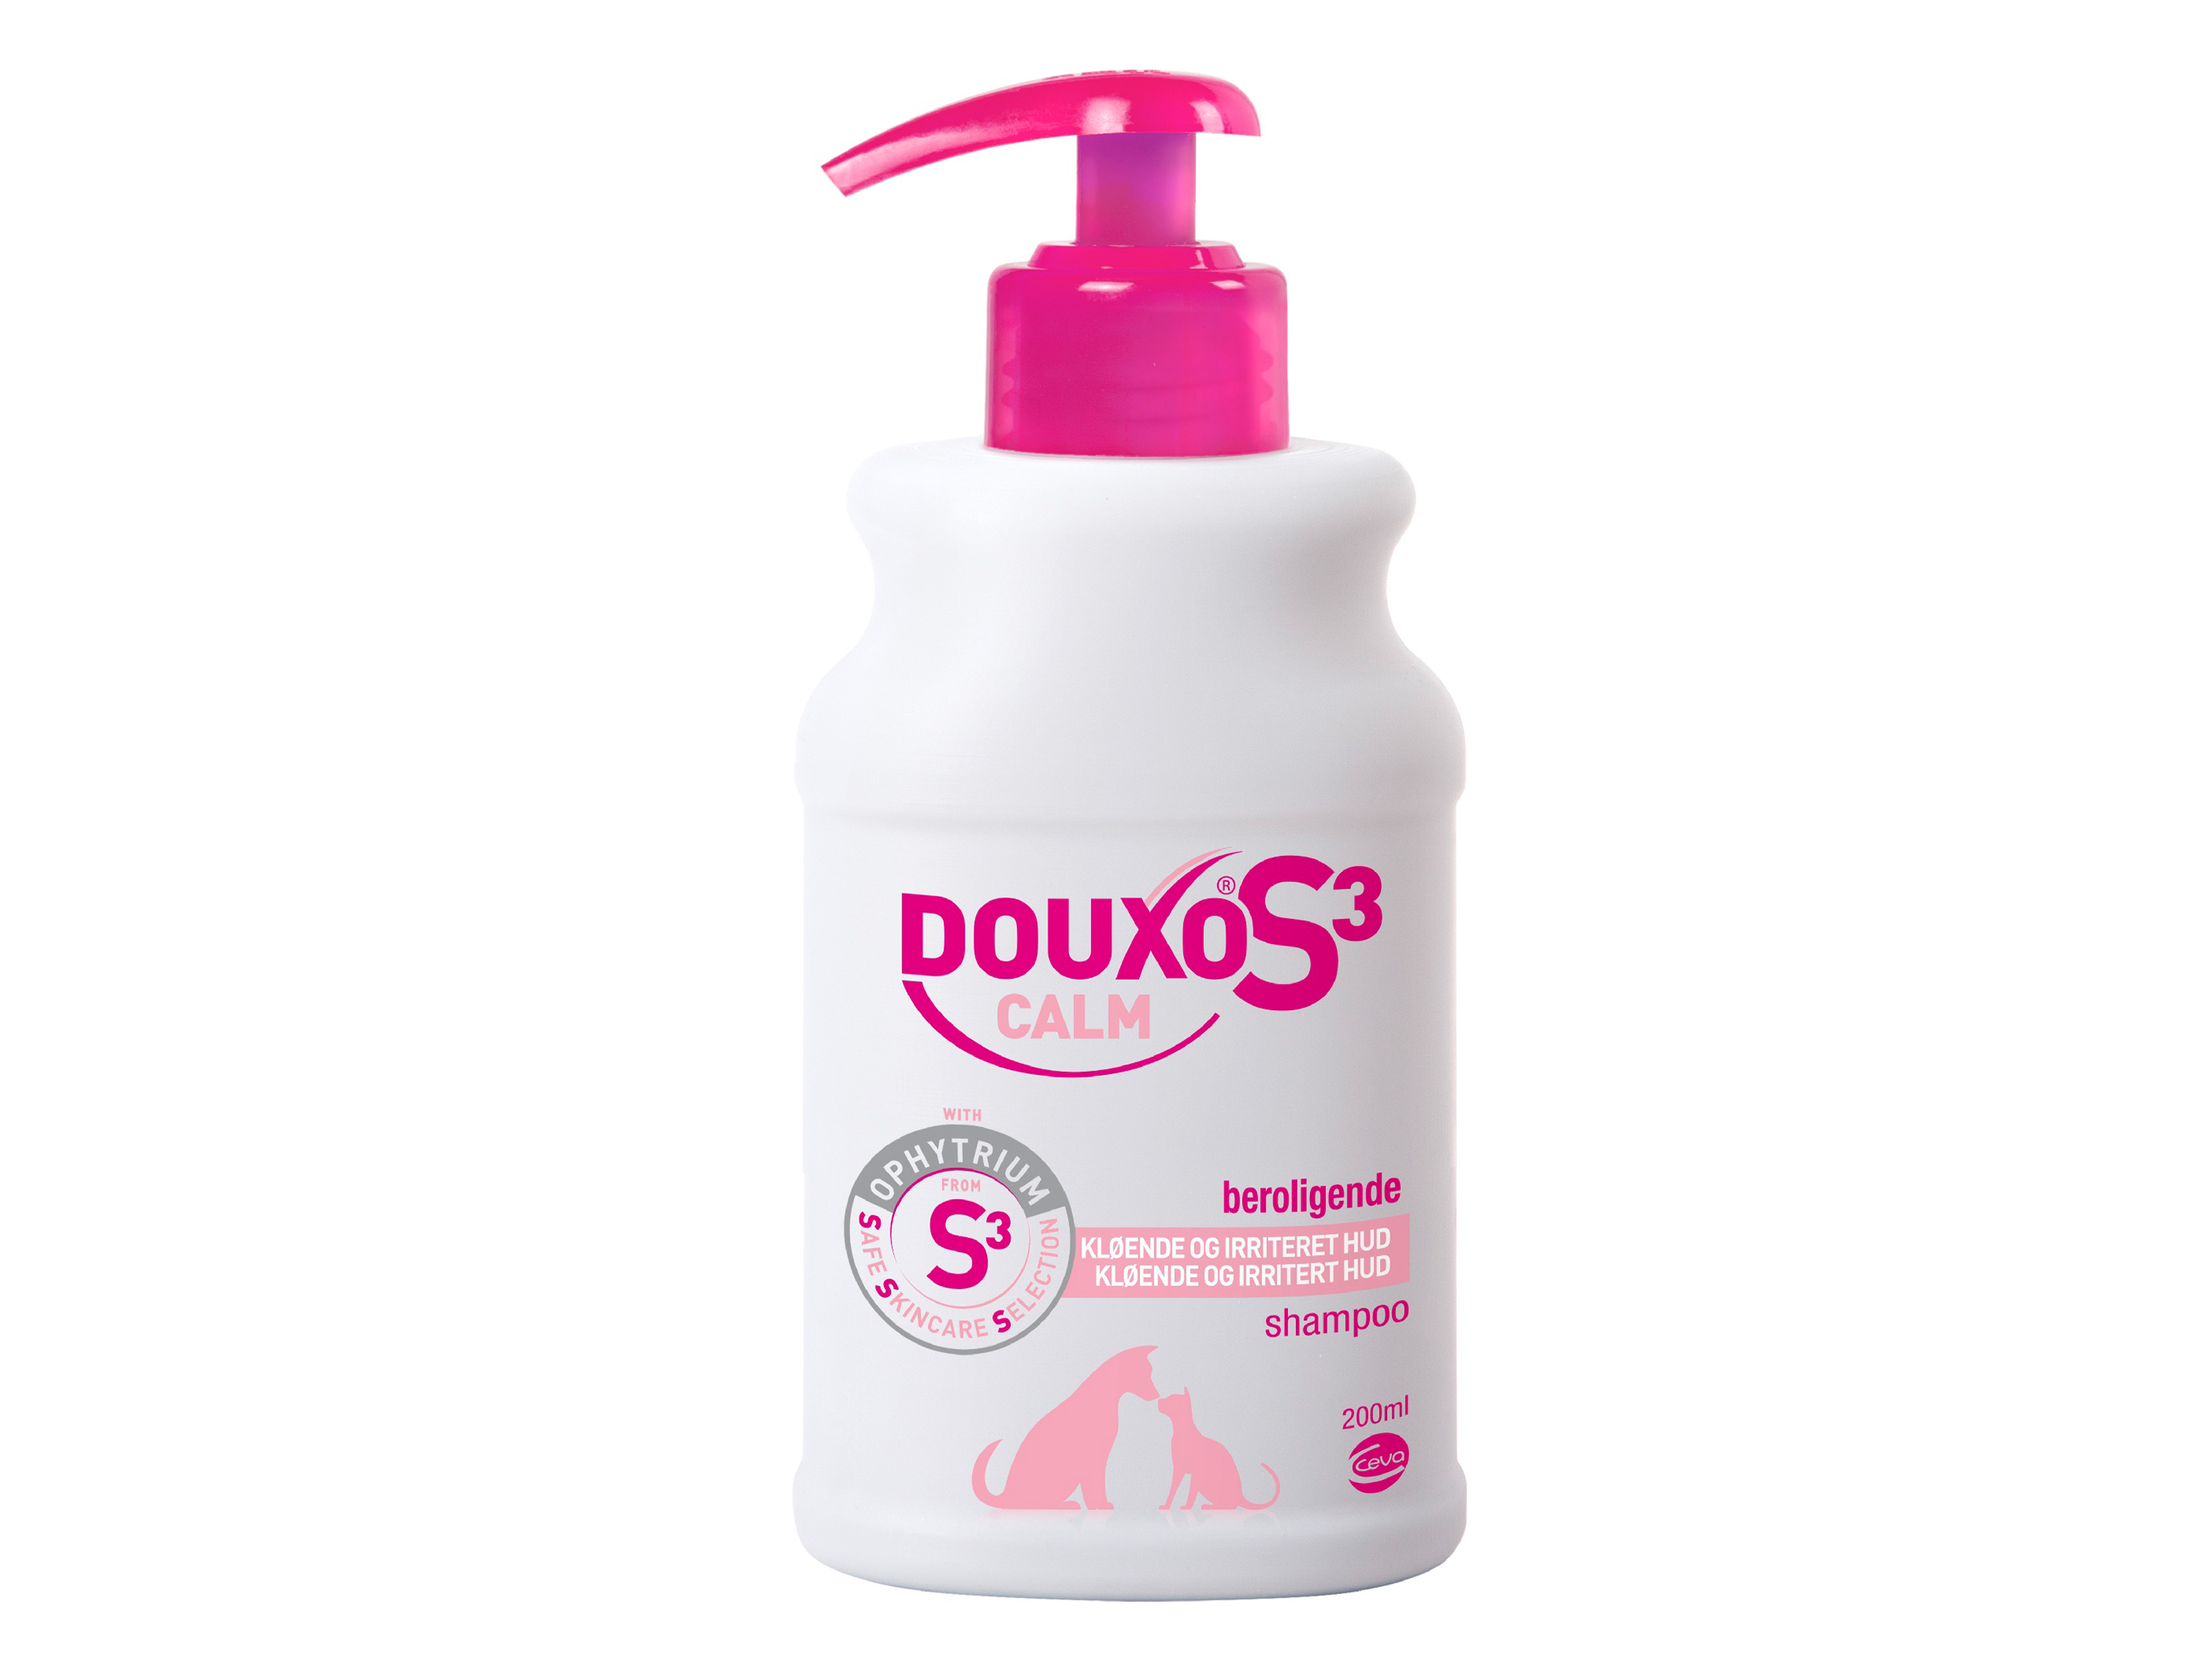 DOUXO S3 Calm Shampoo, 200 ml